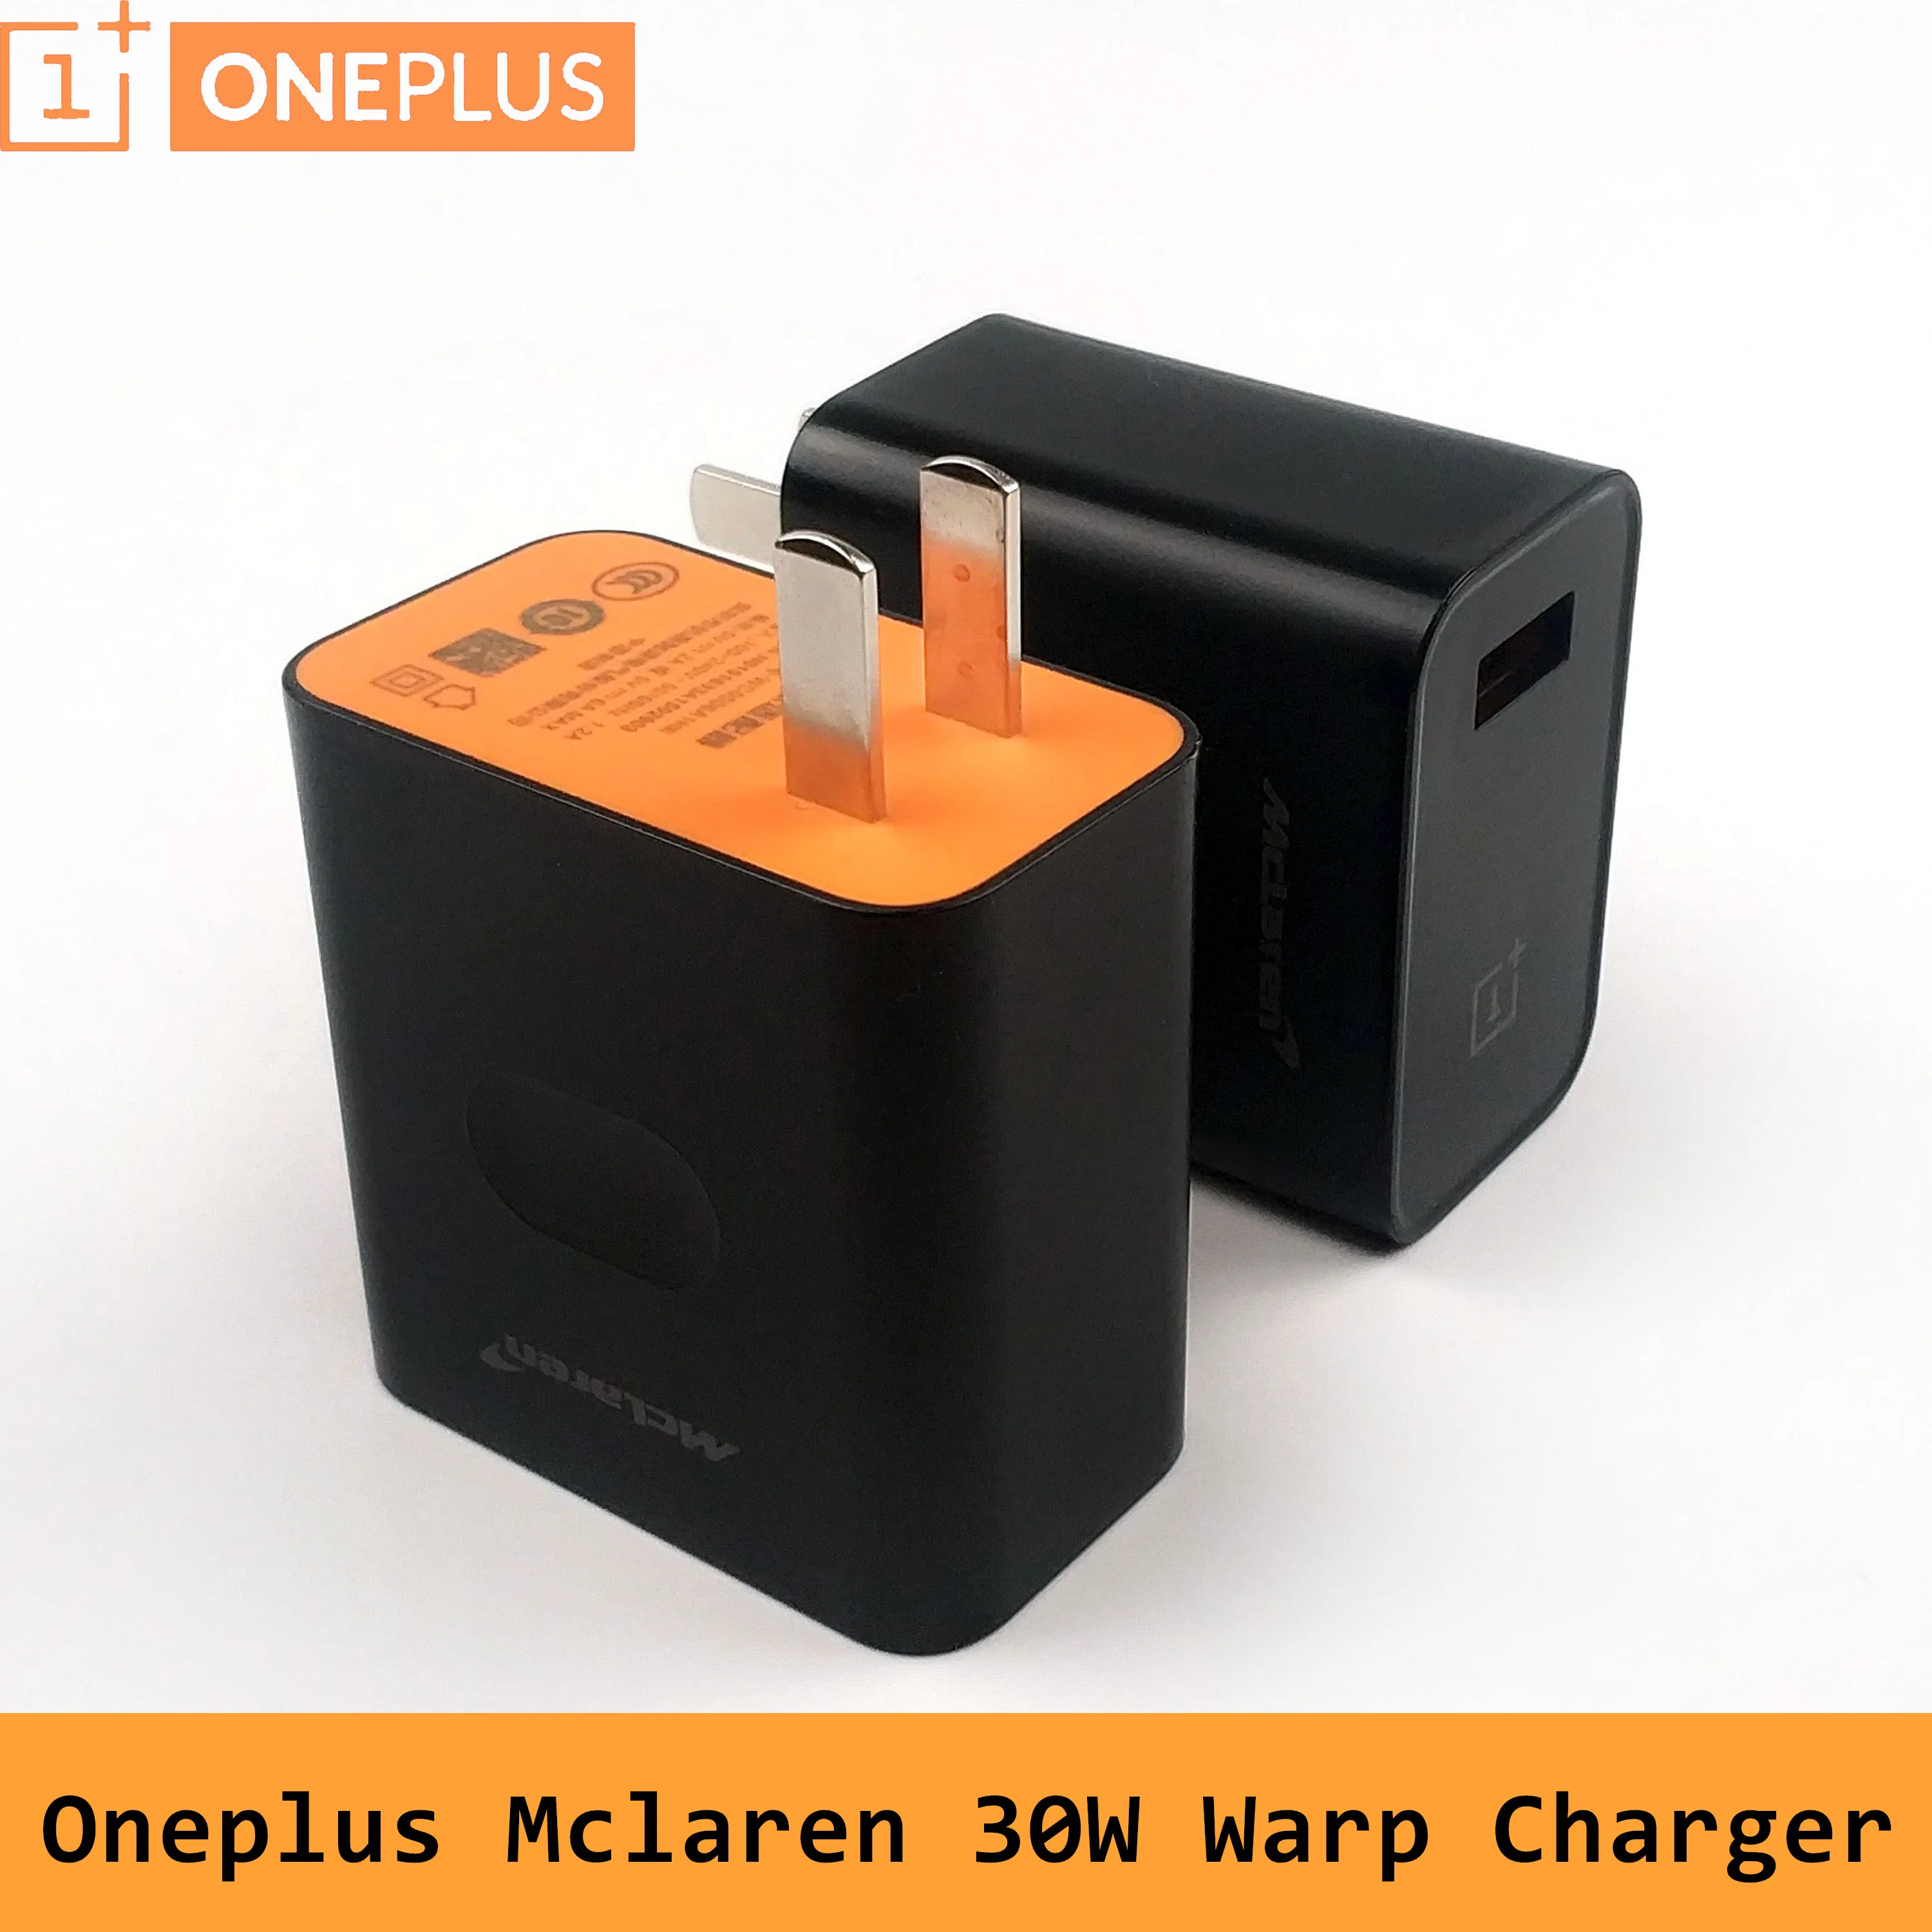 OnePlus 7T Pro Mclaren charger Price in Bangladesh 1